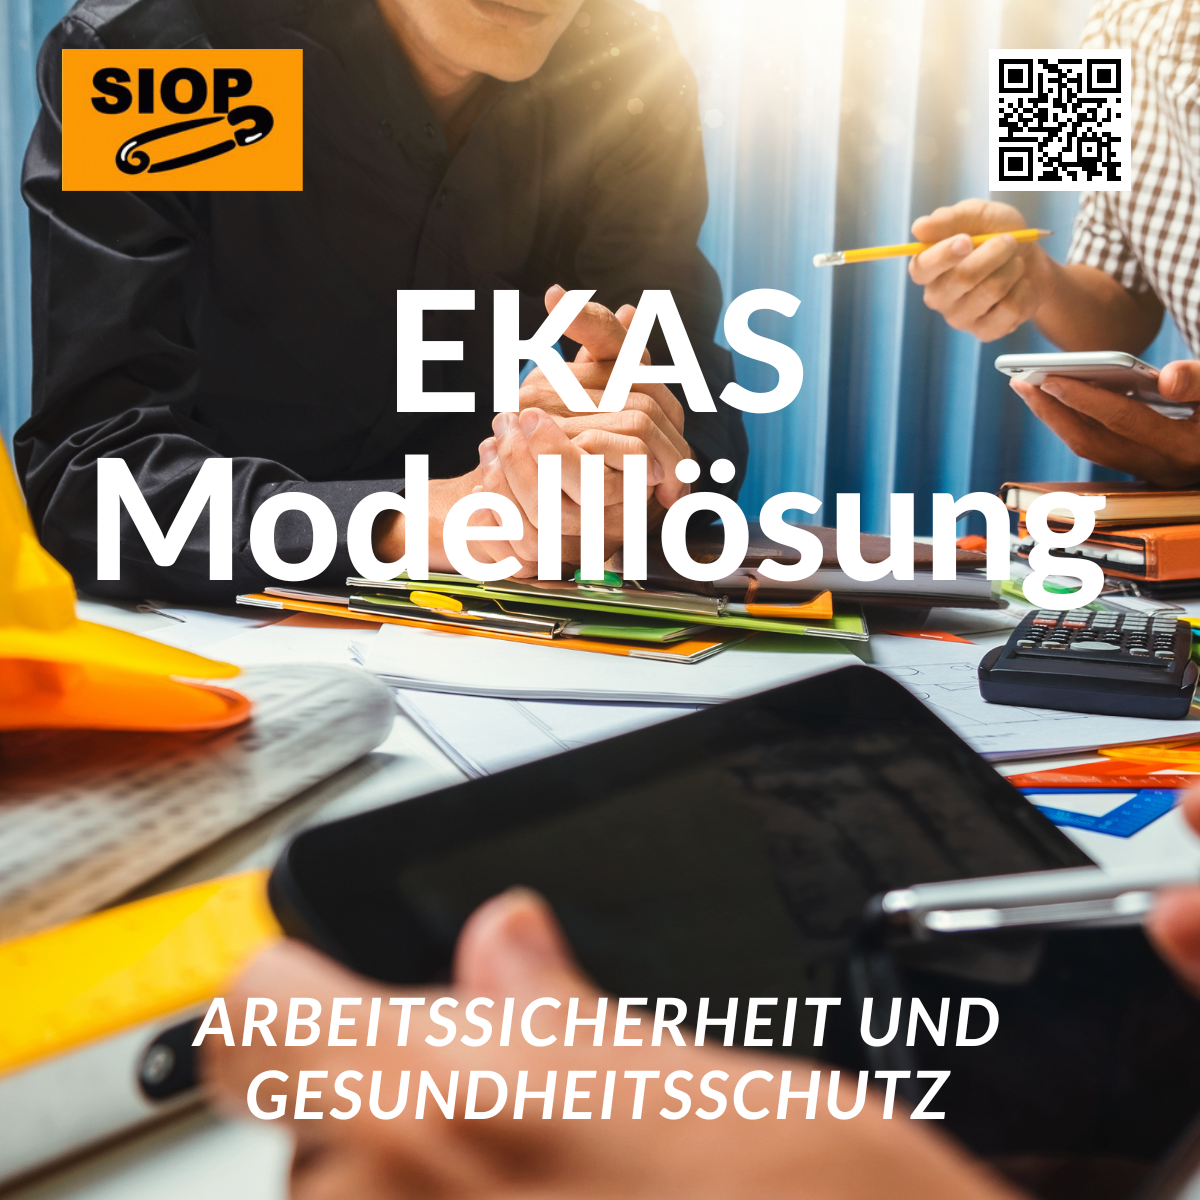 (c) Ekas-modellloesung-21.ch